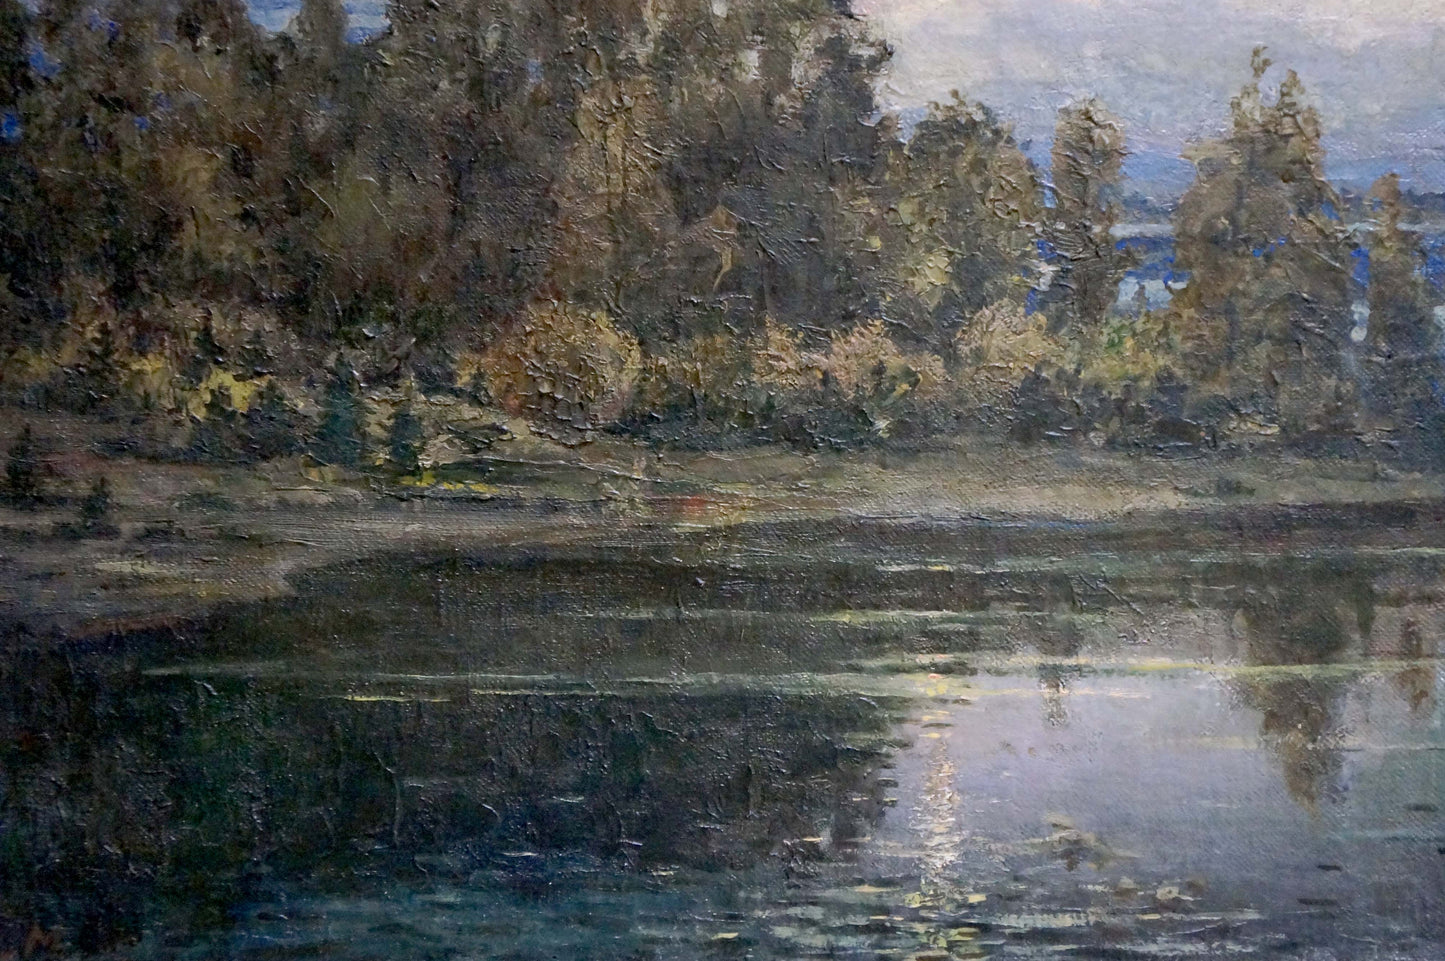 Matvey Alekseevich Dontsov's portrayal of a landscape in oil